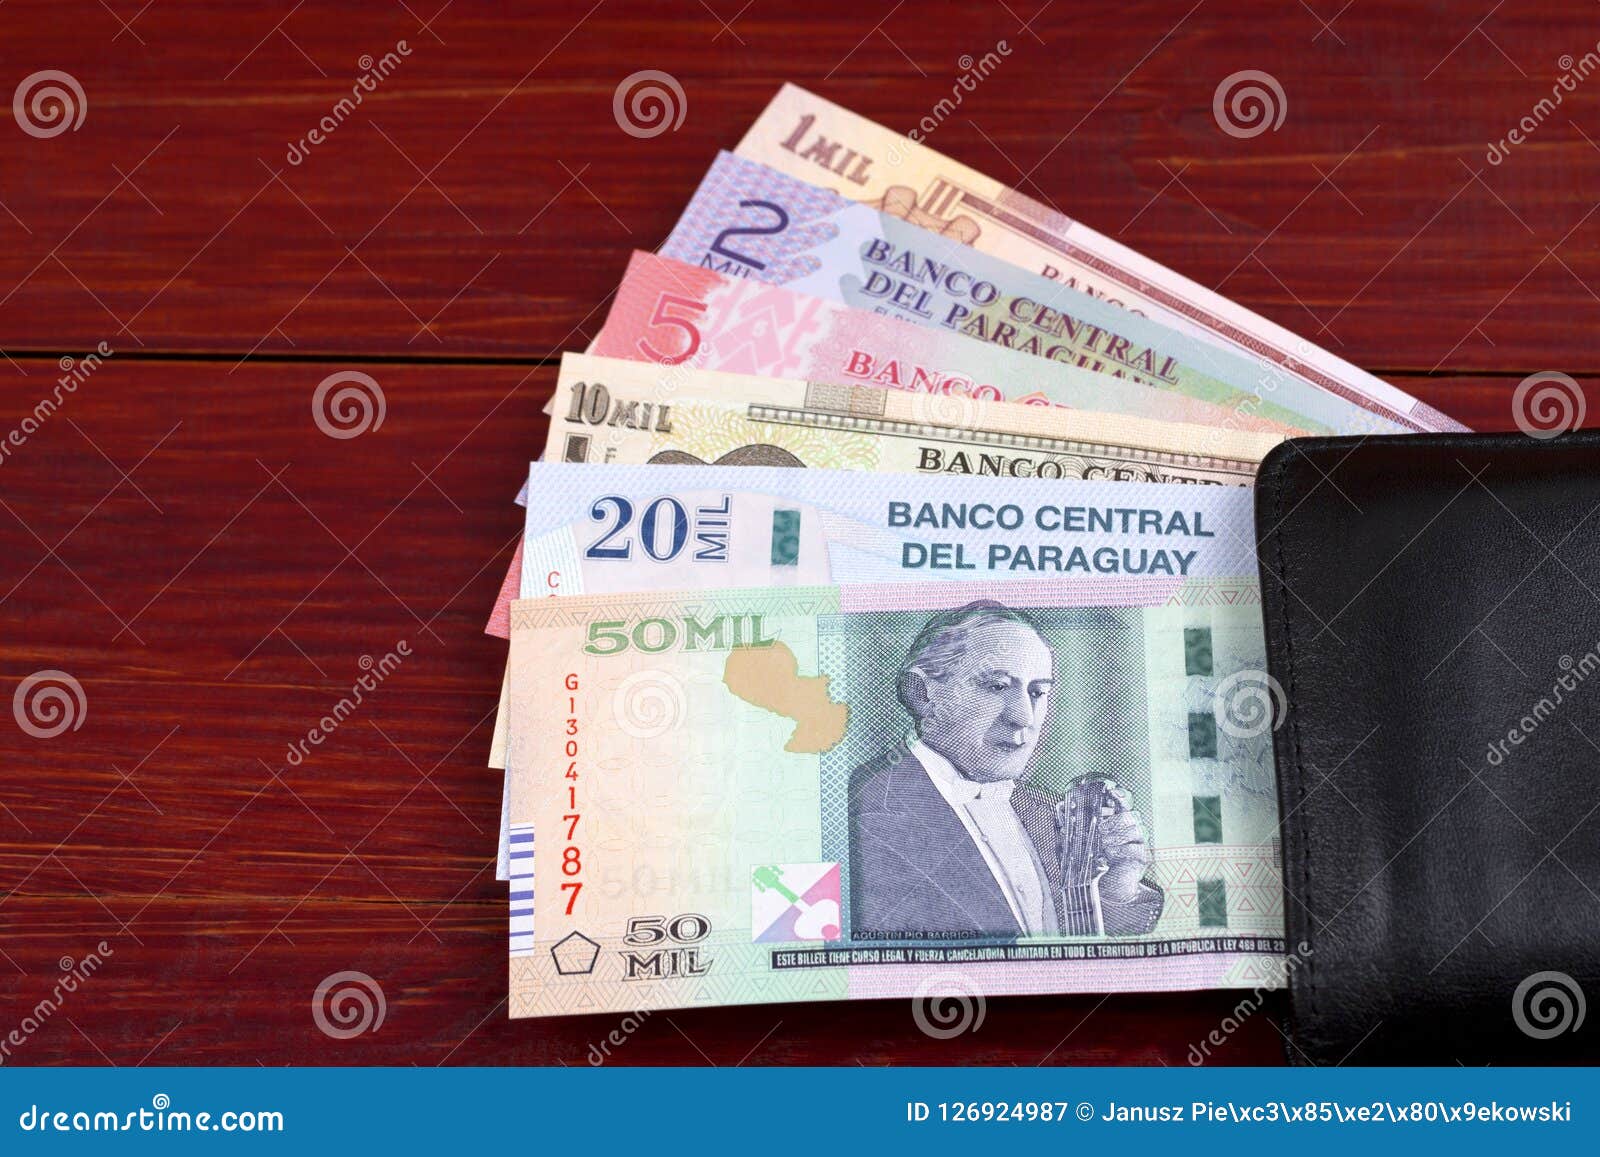 paraguayan guaranies in the black wallet